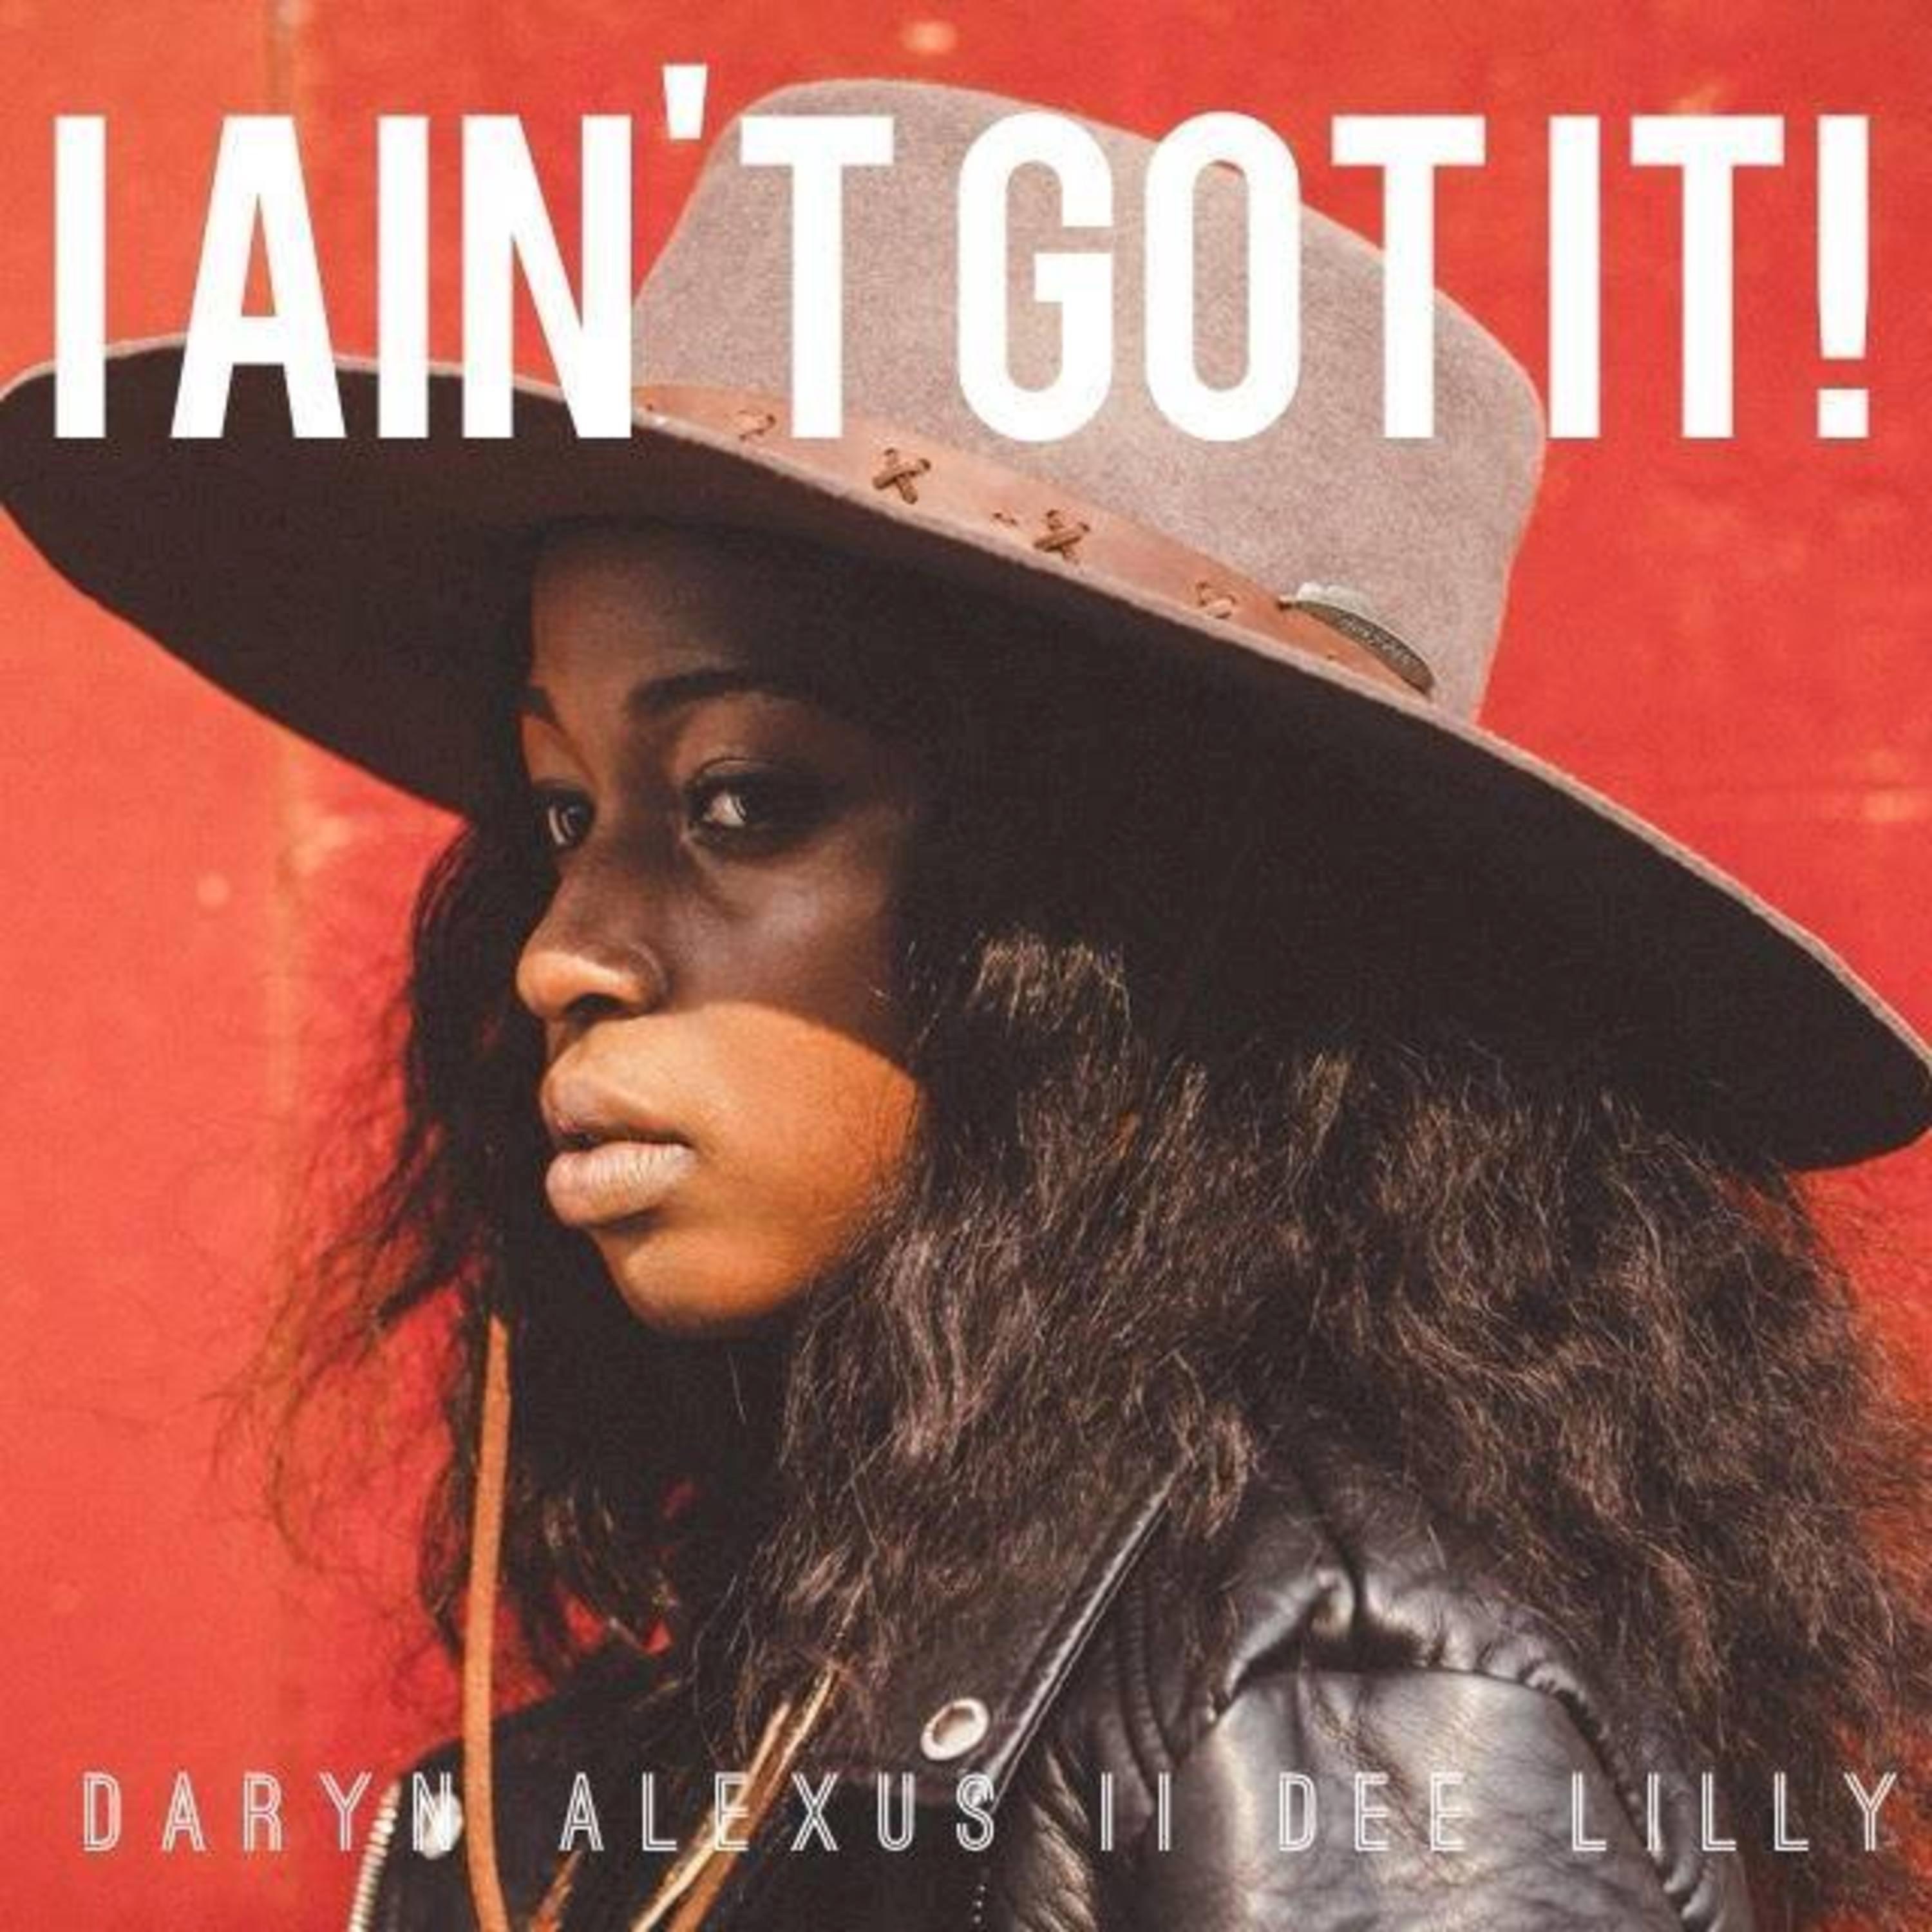 Daryn Alexus - I Ain't Got It